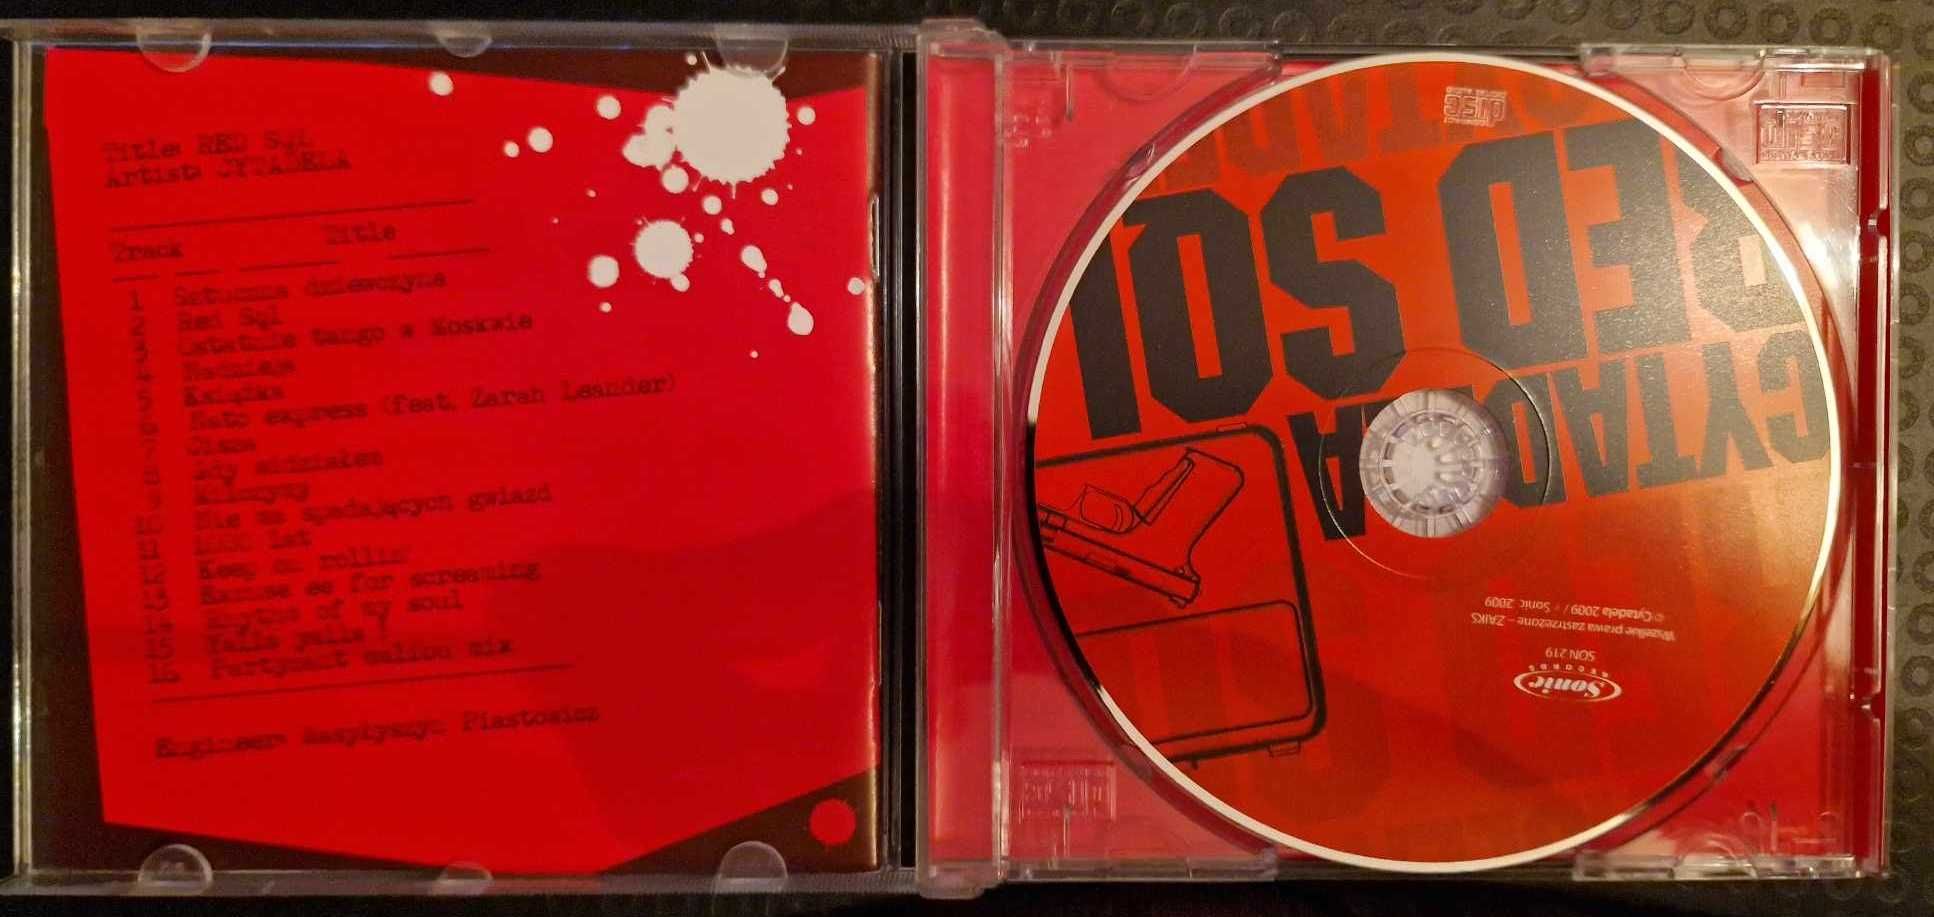 Red Sql - Cytadela CD